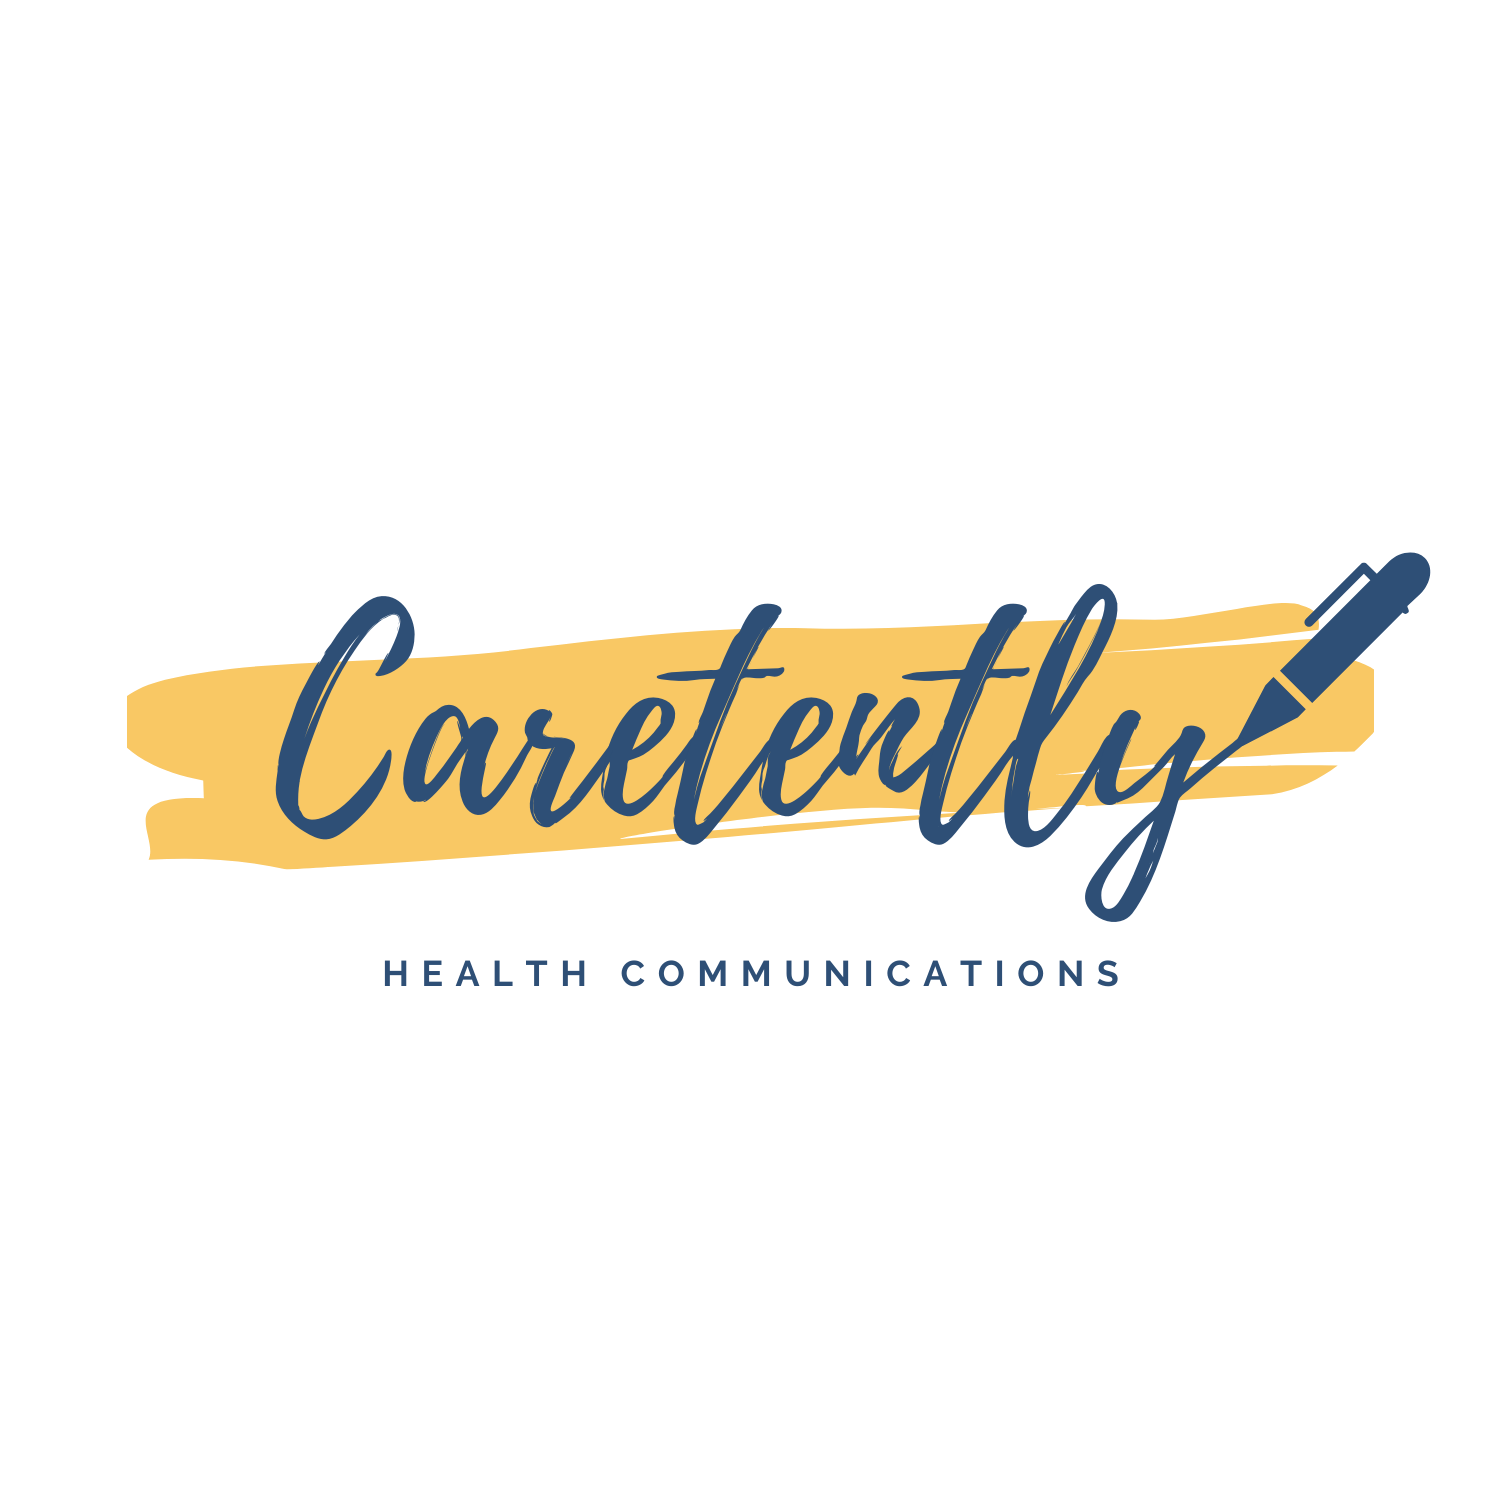 Caretently Health Communications